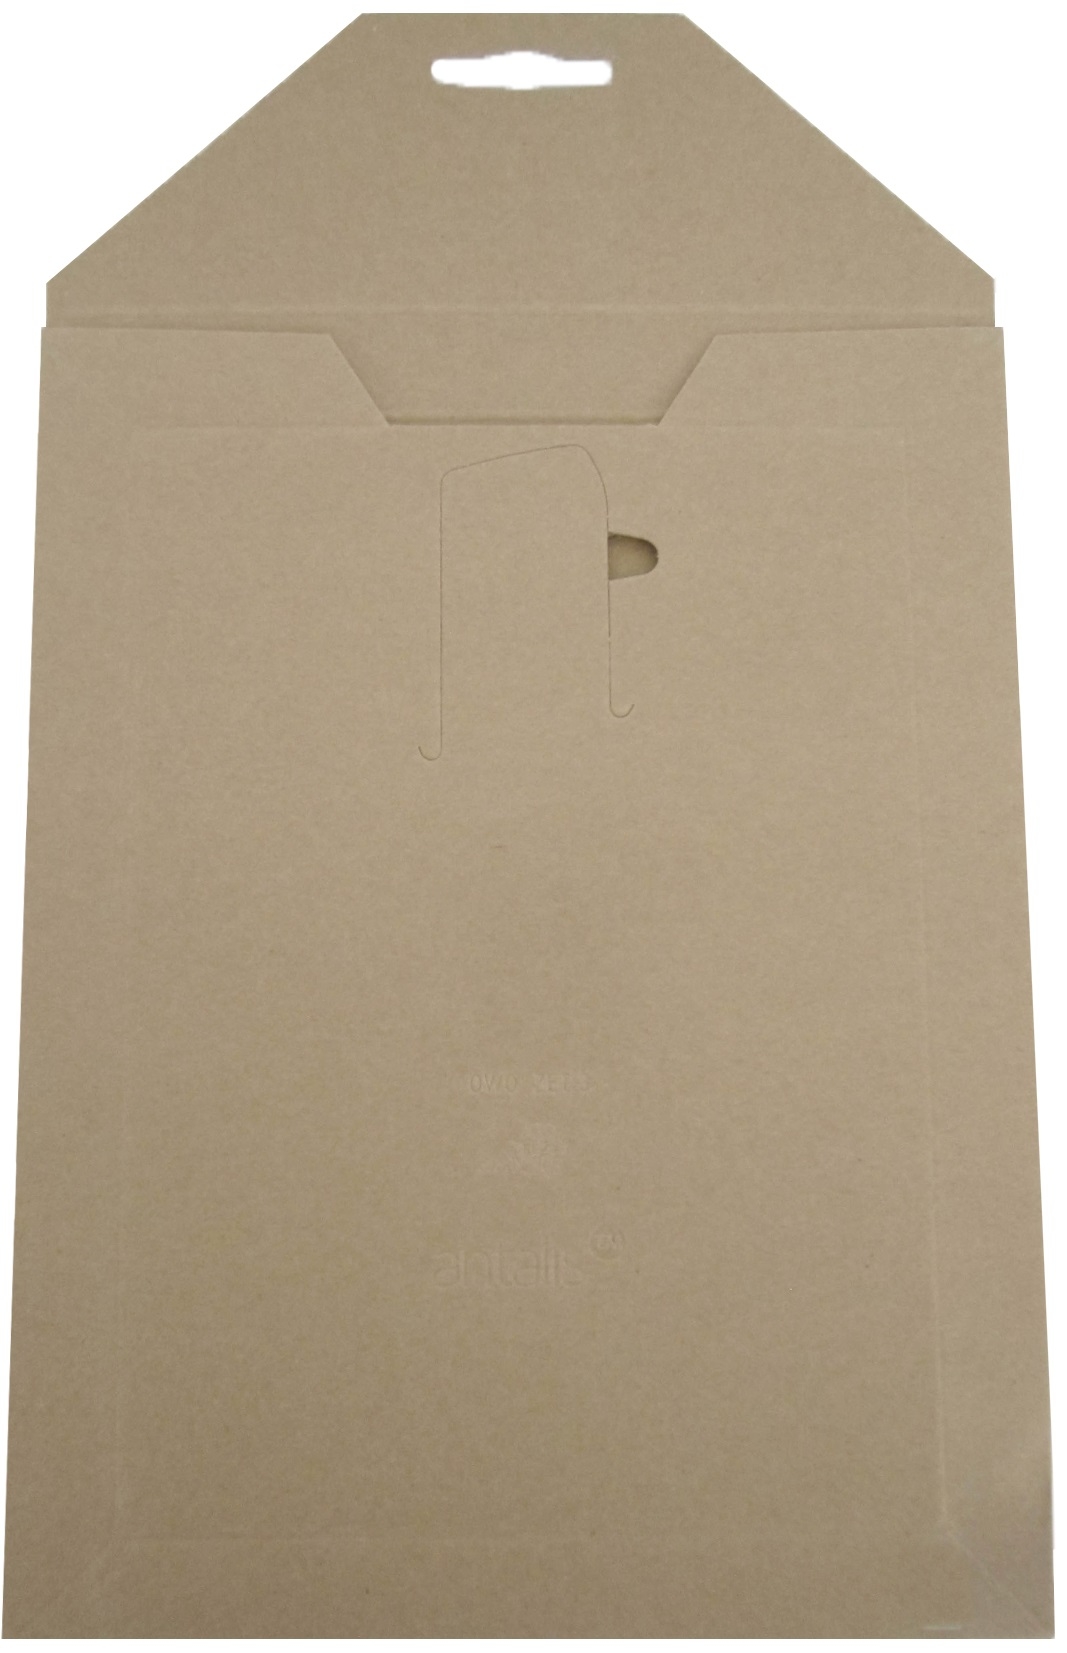 OWO-ZET Enveloppes Carton 2 276224 215x270mm brun 50 pcs.